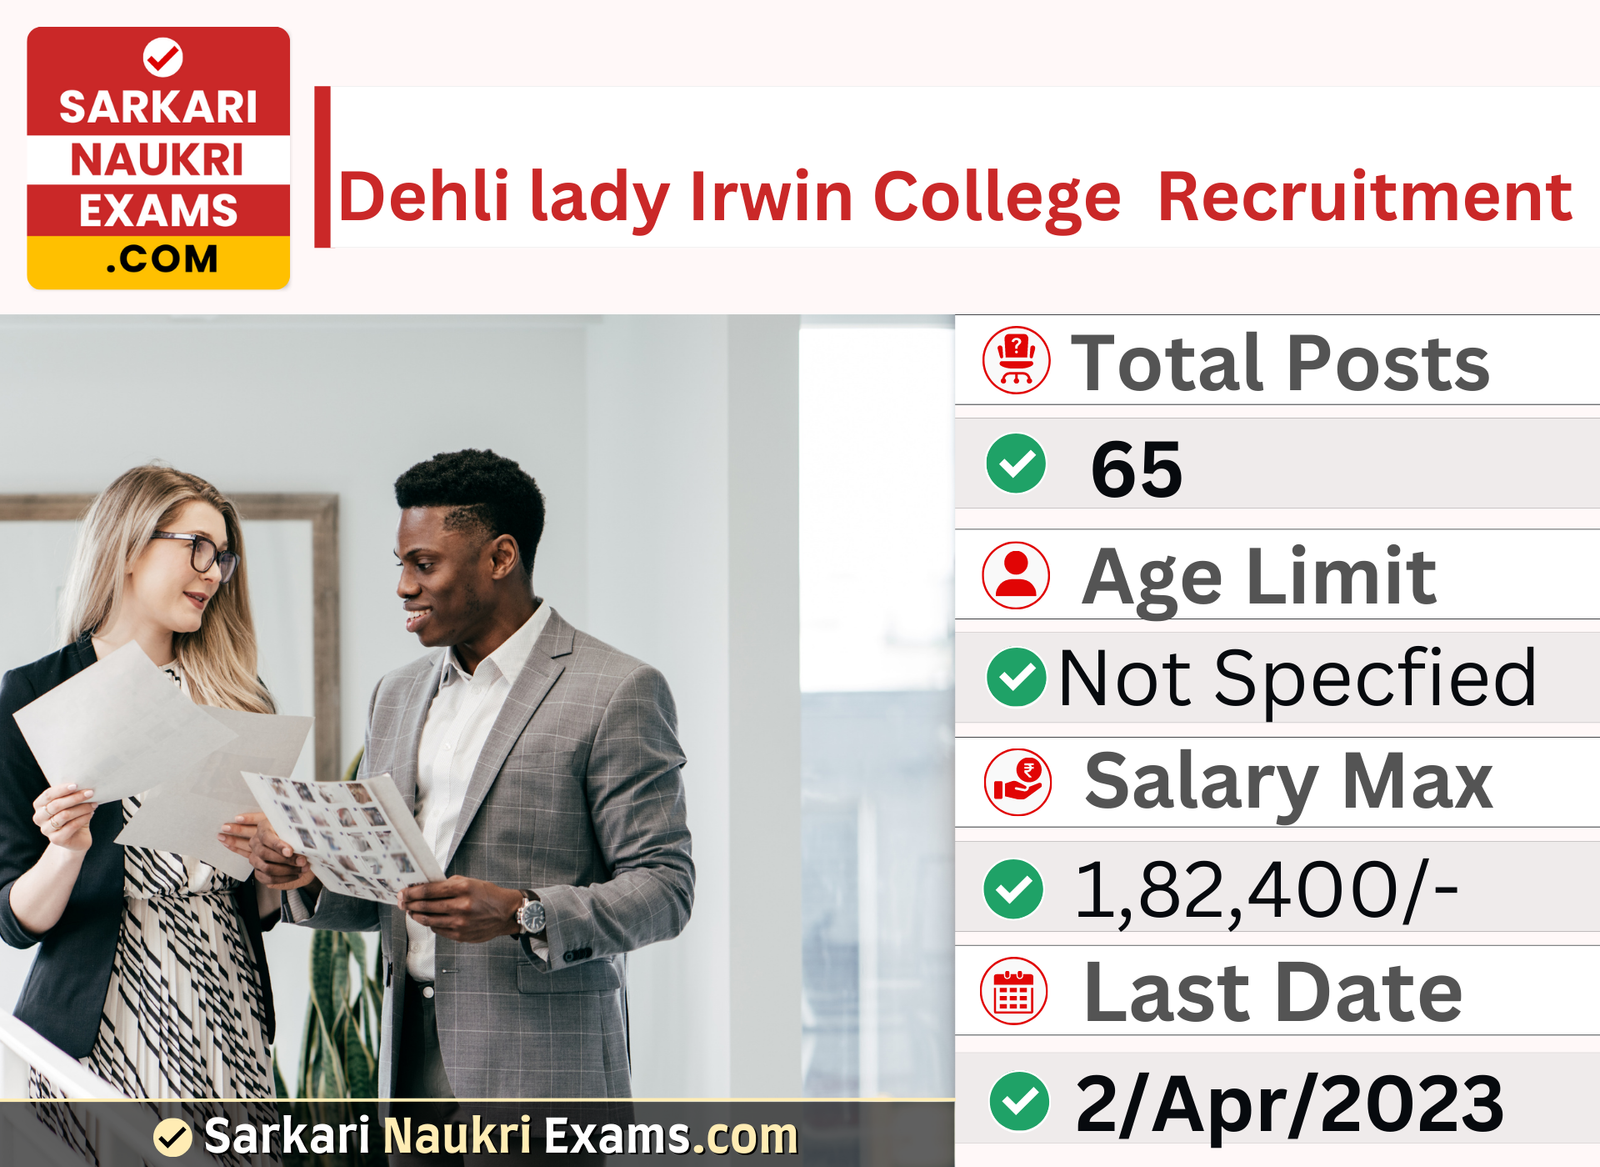 Dehli lady Irwin College Assistant Professor Recruitment 2023 | Salary Upto 1,82,400/-